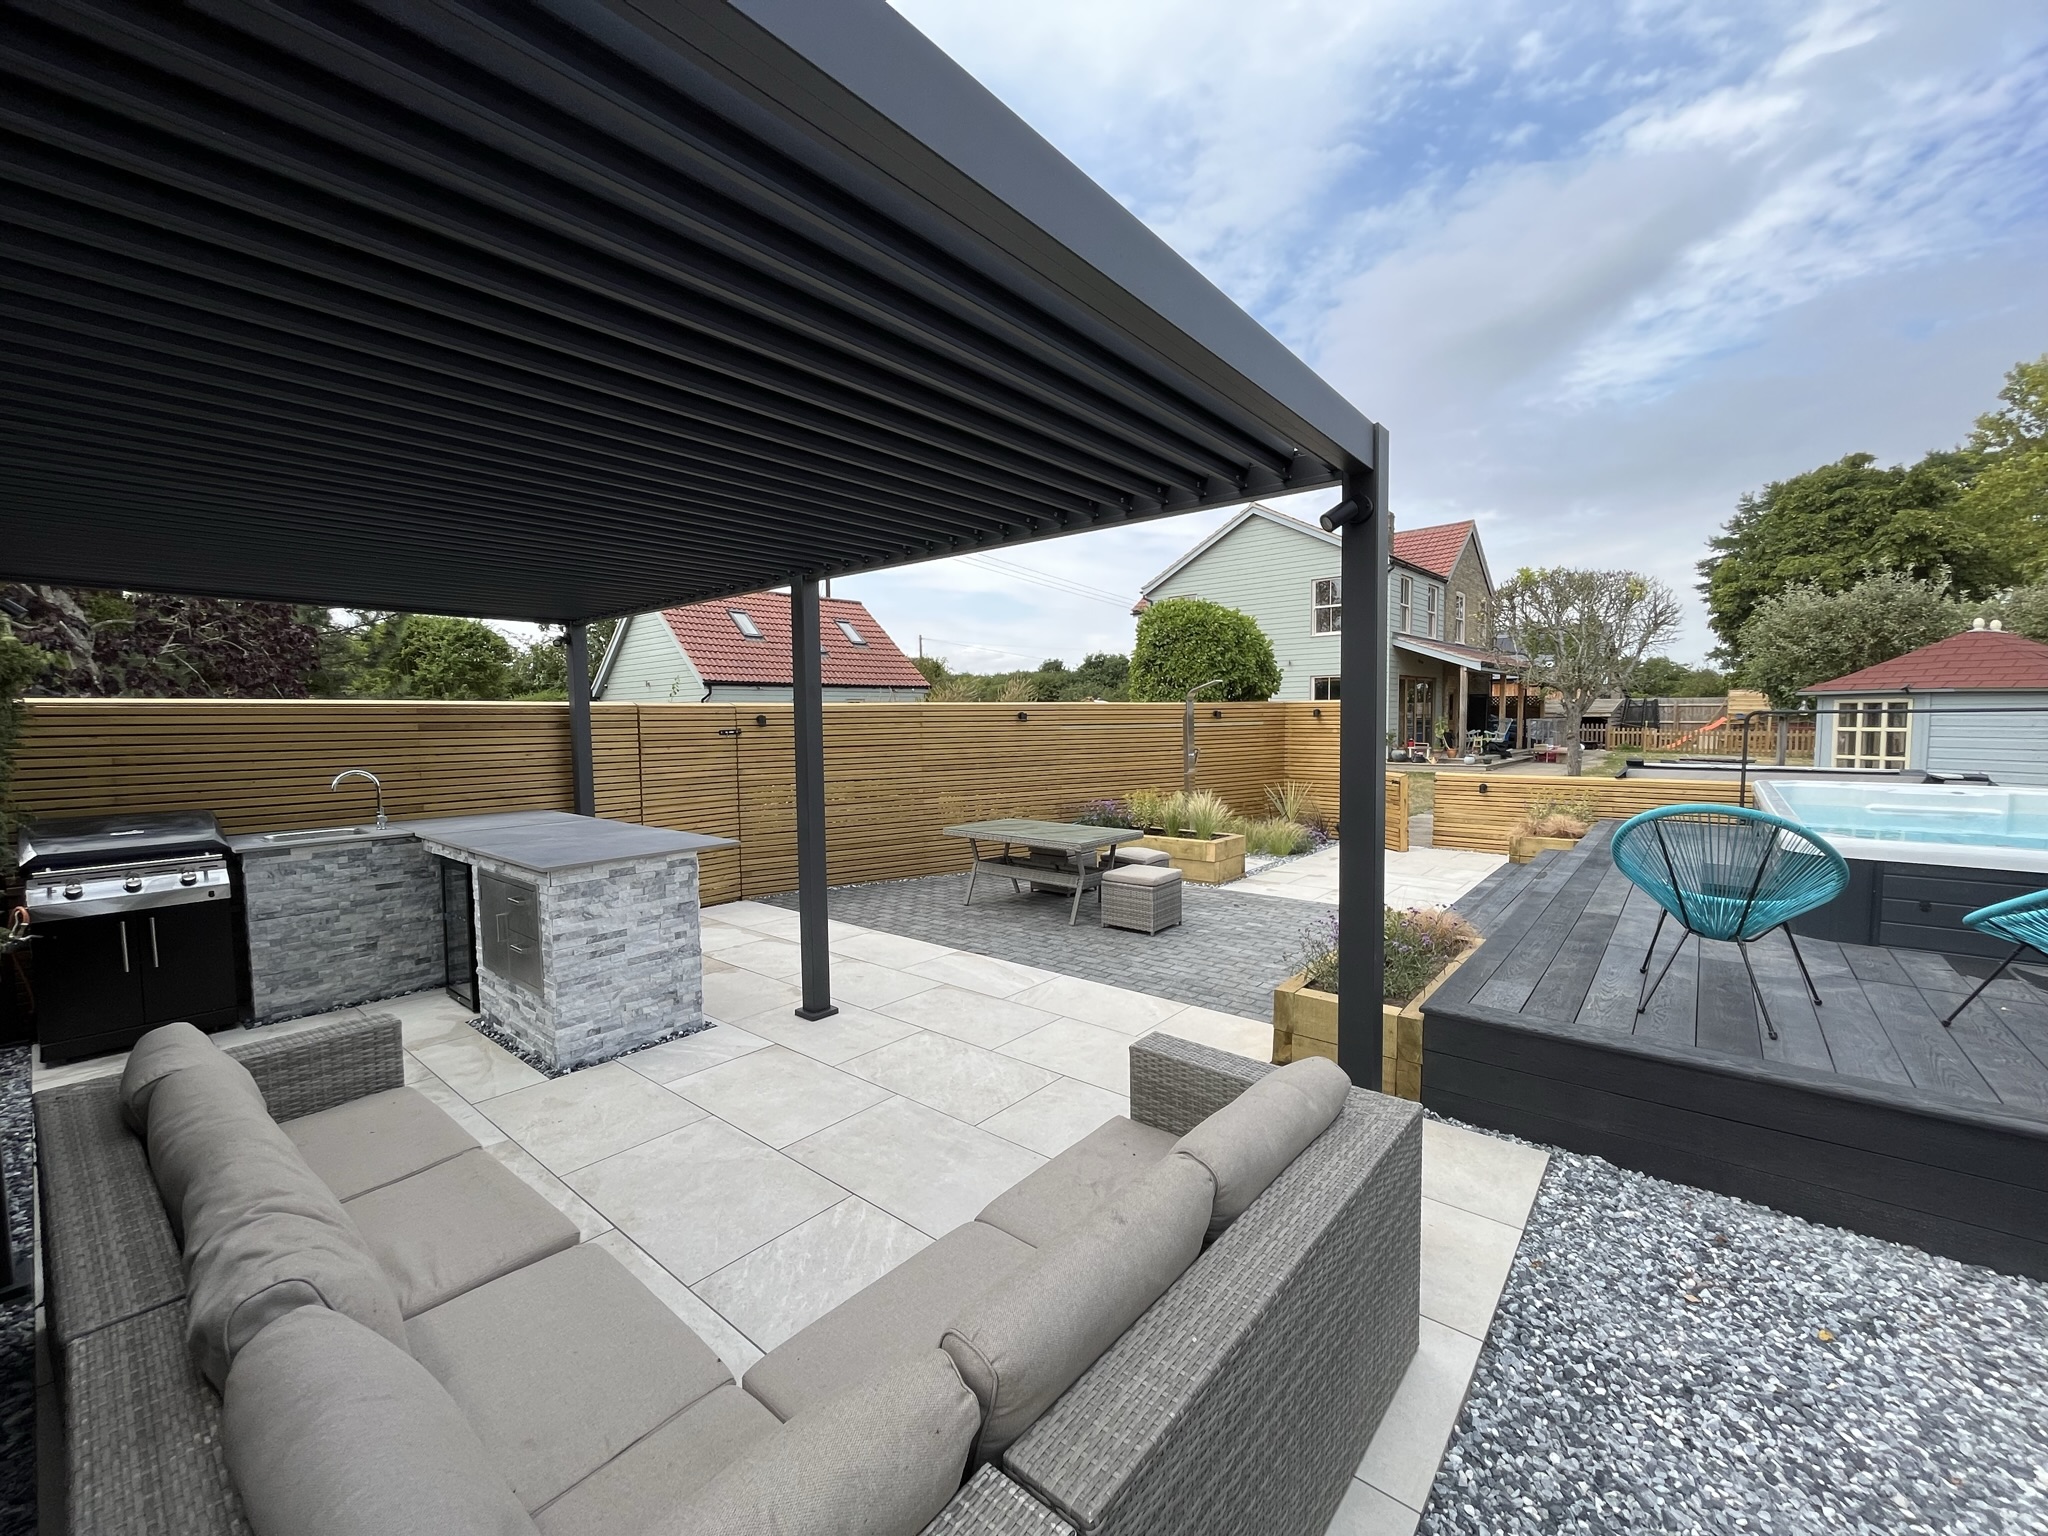 Luxury outdoor space Cambridge - 5